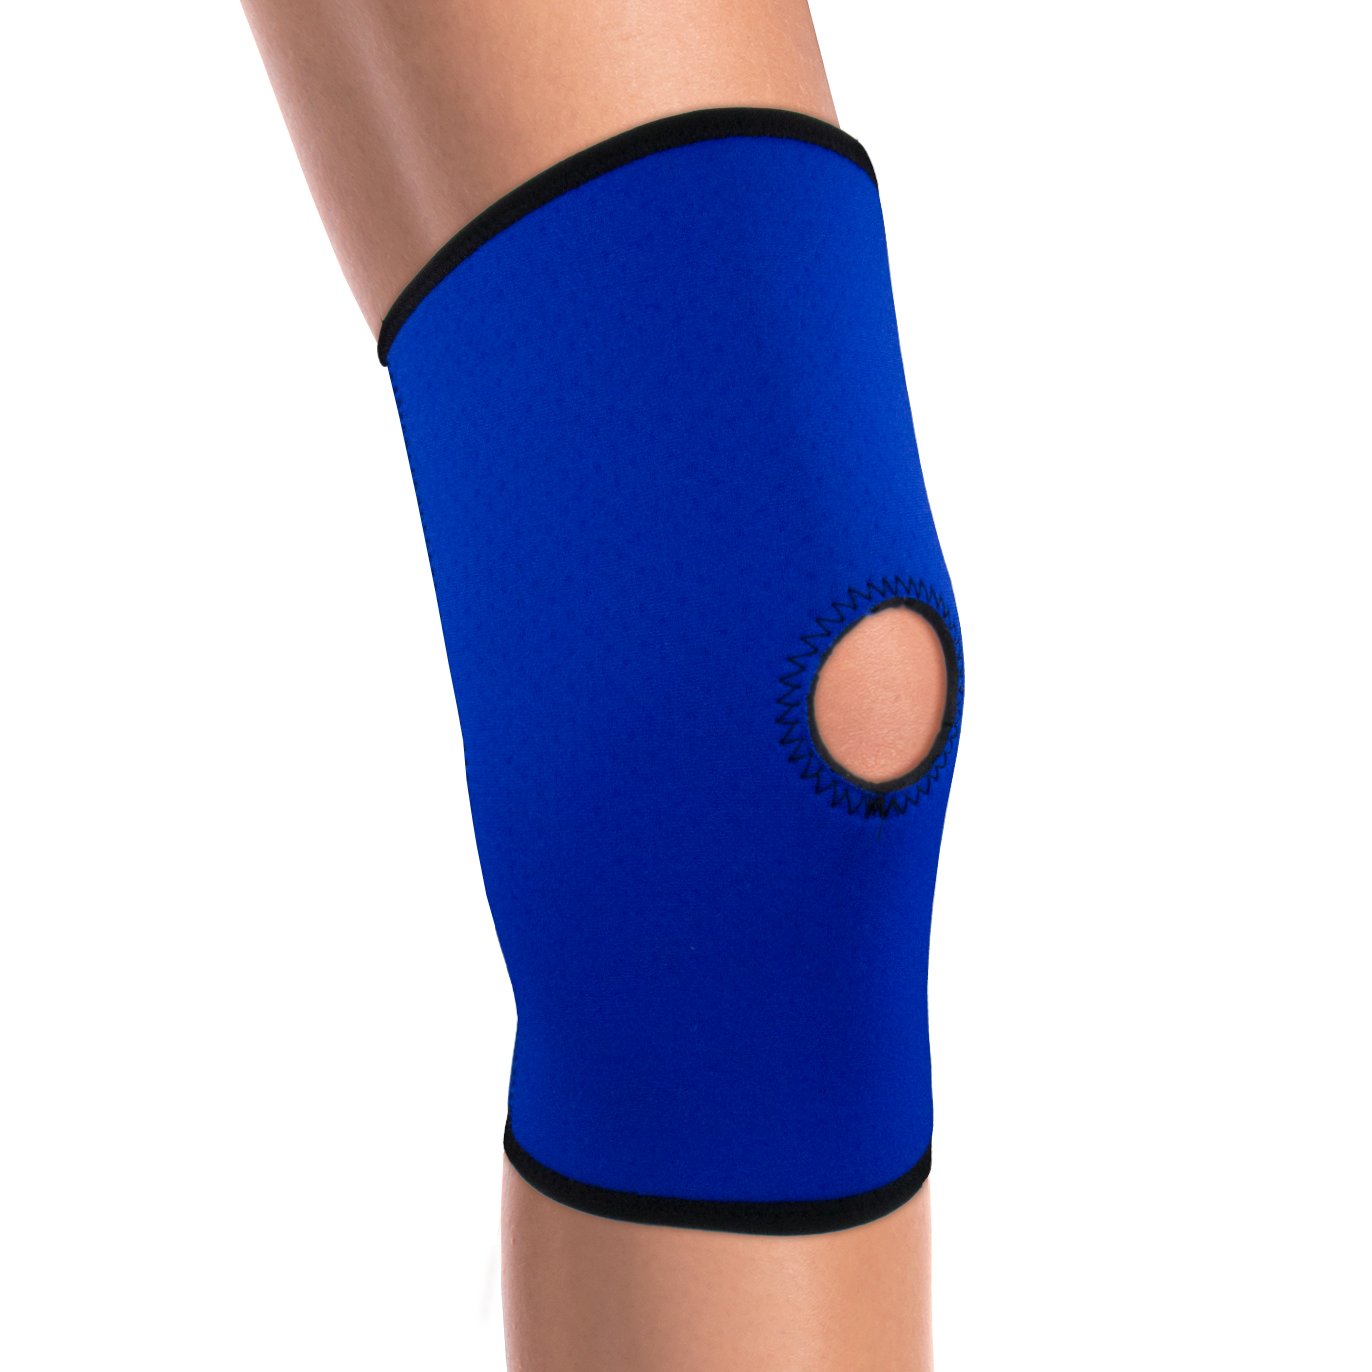 Neoprene Knee Support - Open Patella by OTC